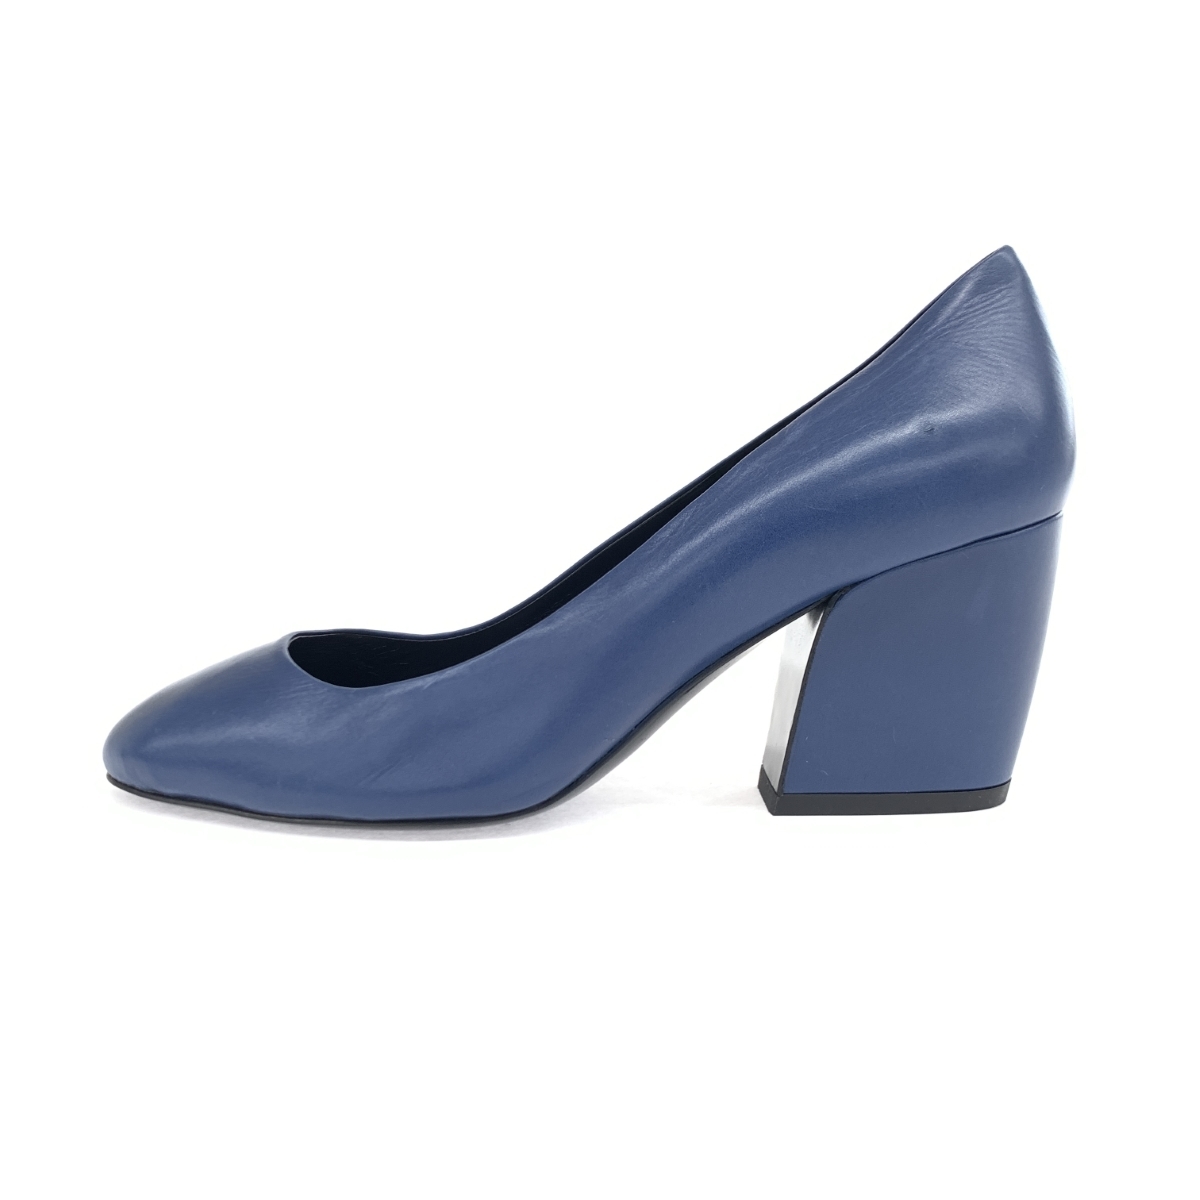  beautiful goods *Pierre Hardy Pierre a Rudy tea n key heel pumps 36 1/2* blue leather lady's shoes shoes shoes